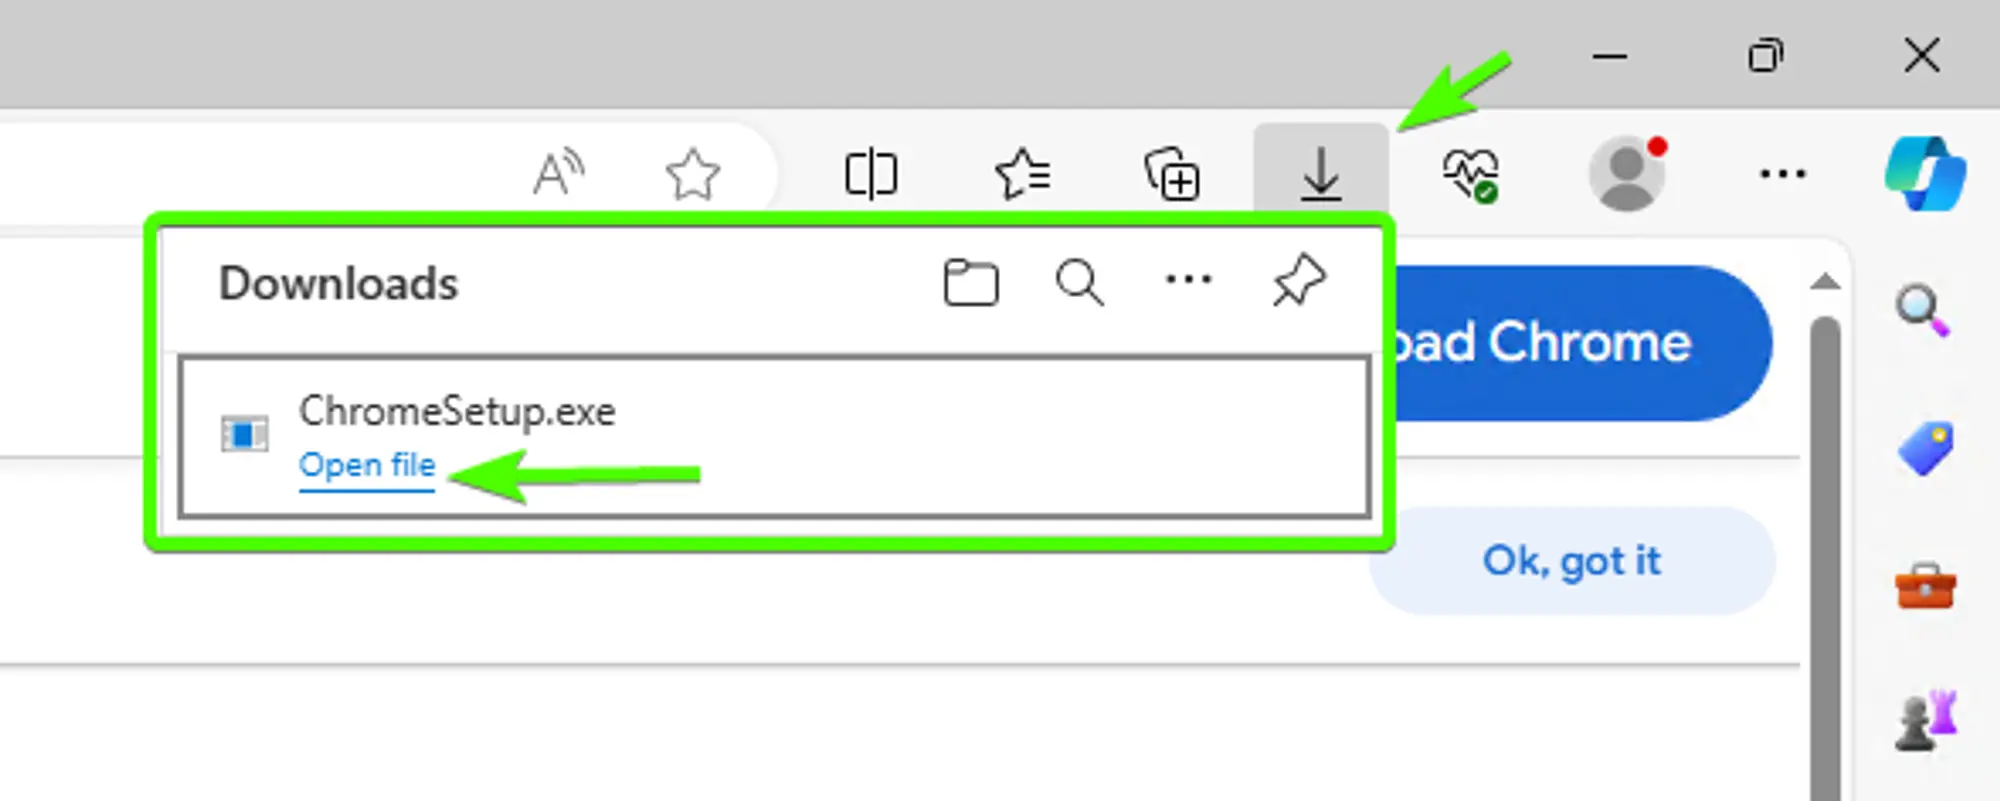 The Microsoft Edge downloads tab displaying the recently download “ChromeSetup.exe”